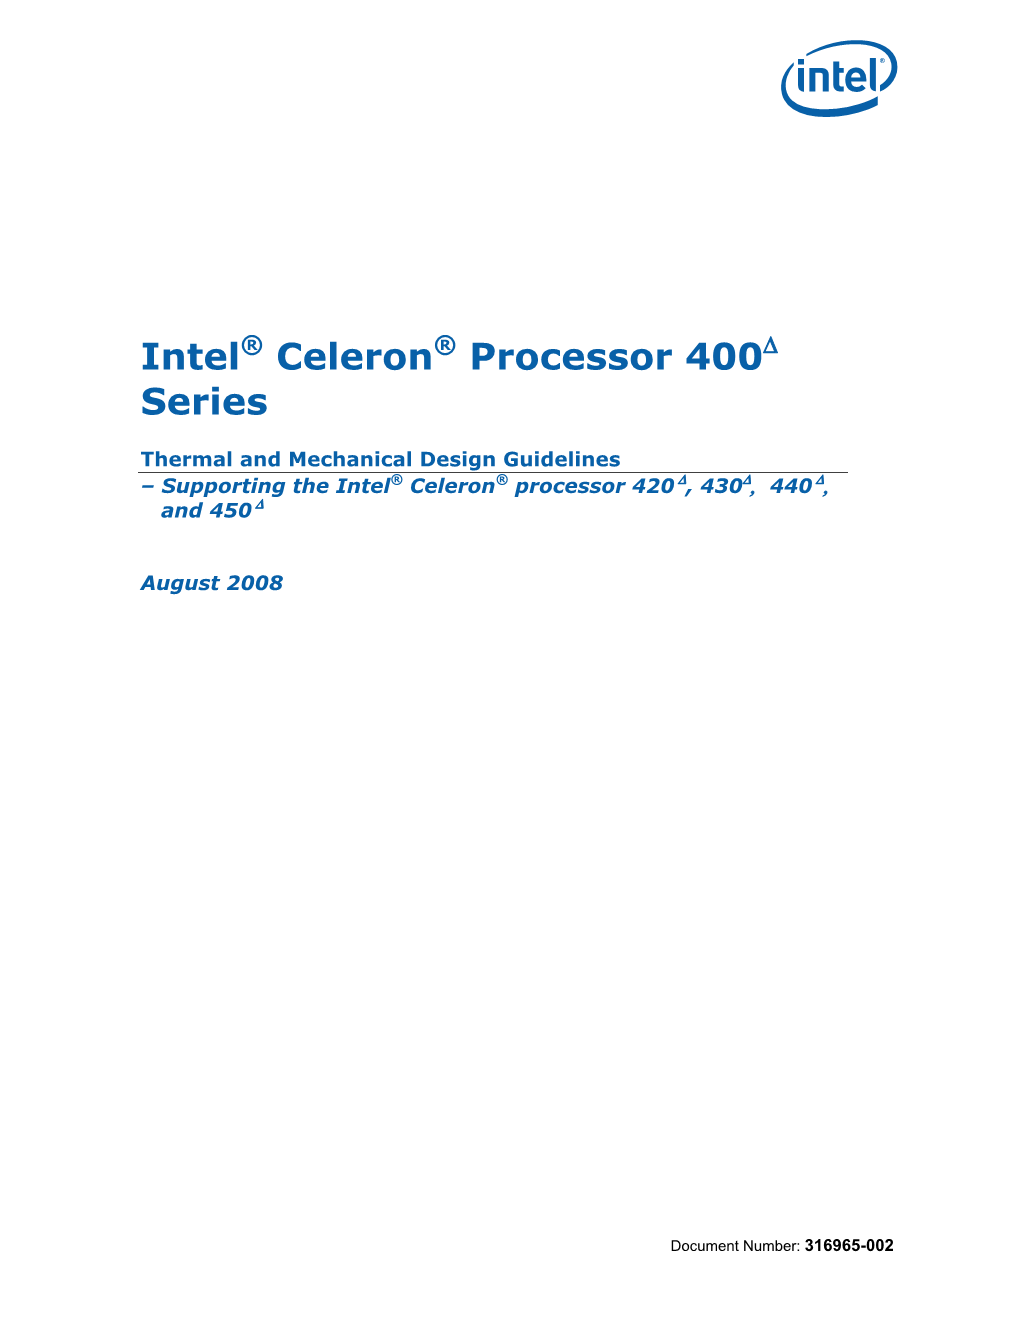 Intel Celeron Processor 400 Series Thermal and Mechanical Design